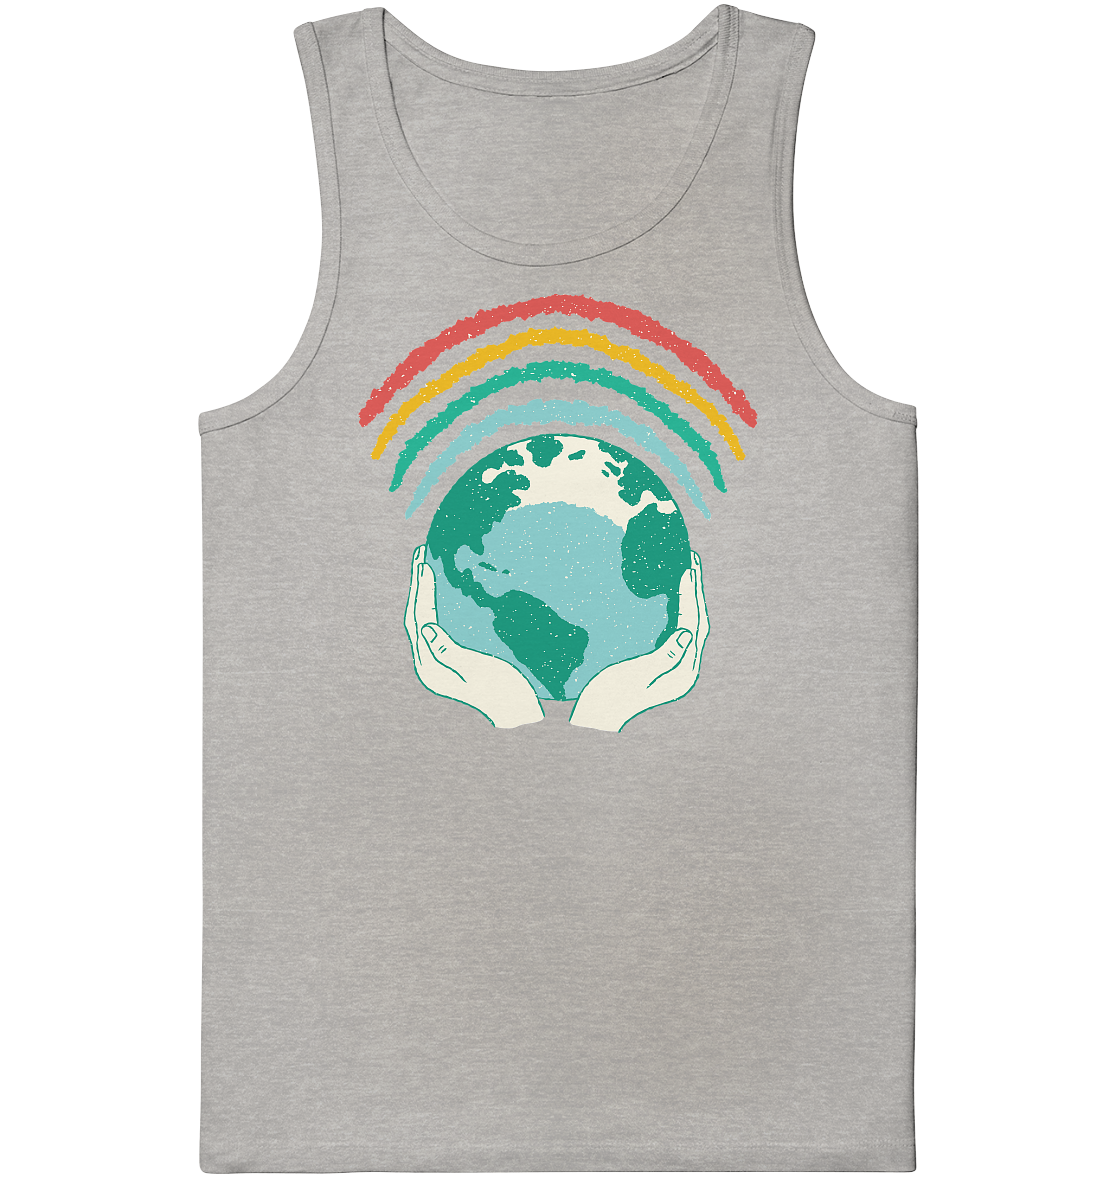 Rainbow with globe in hands - organic tank top